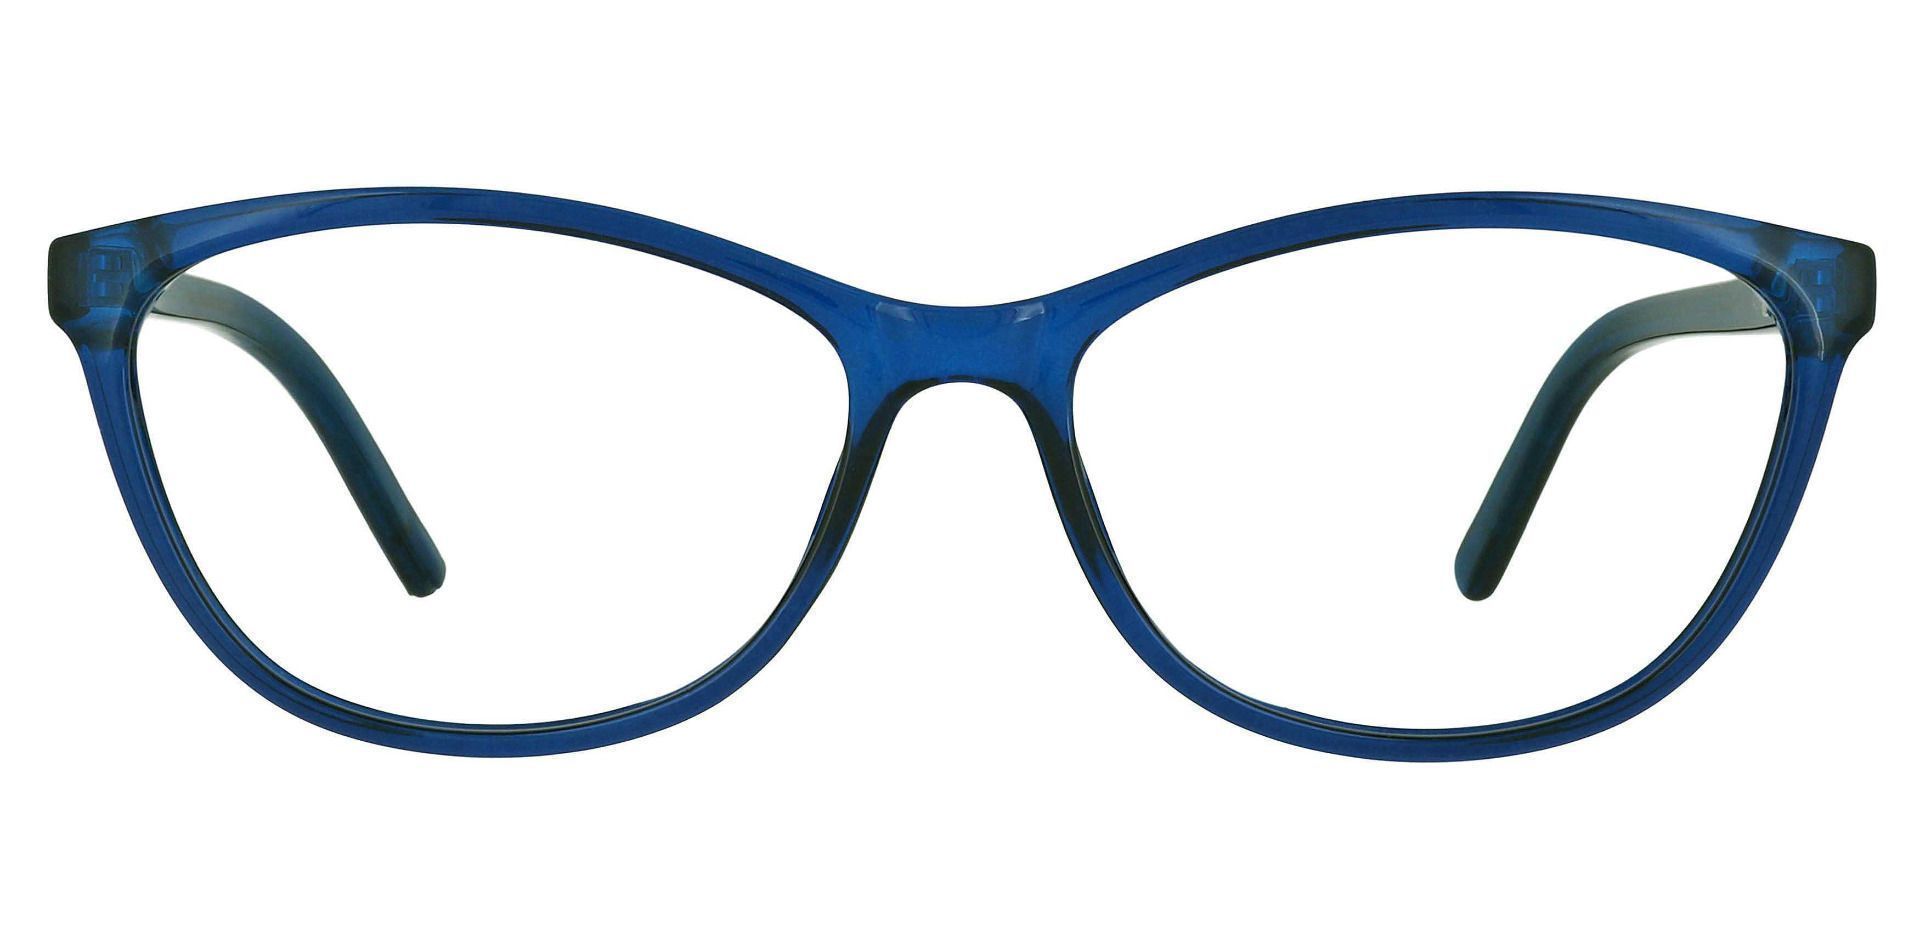 Sally Oval Prescription Glasses - Blue